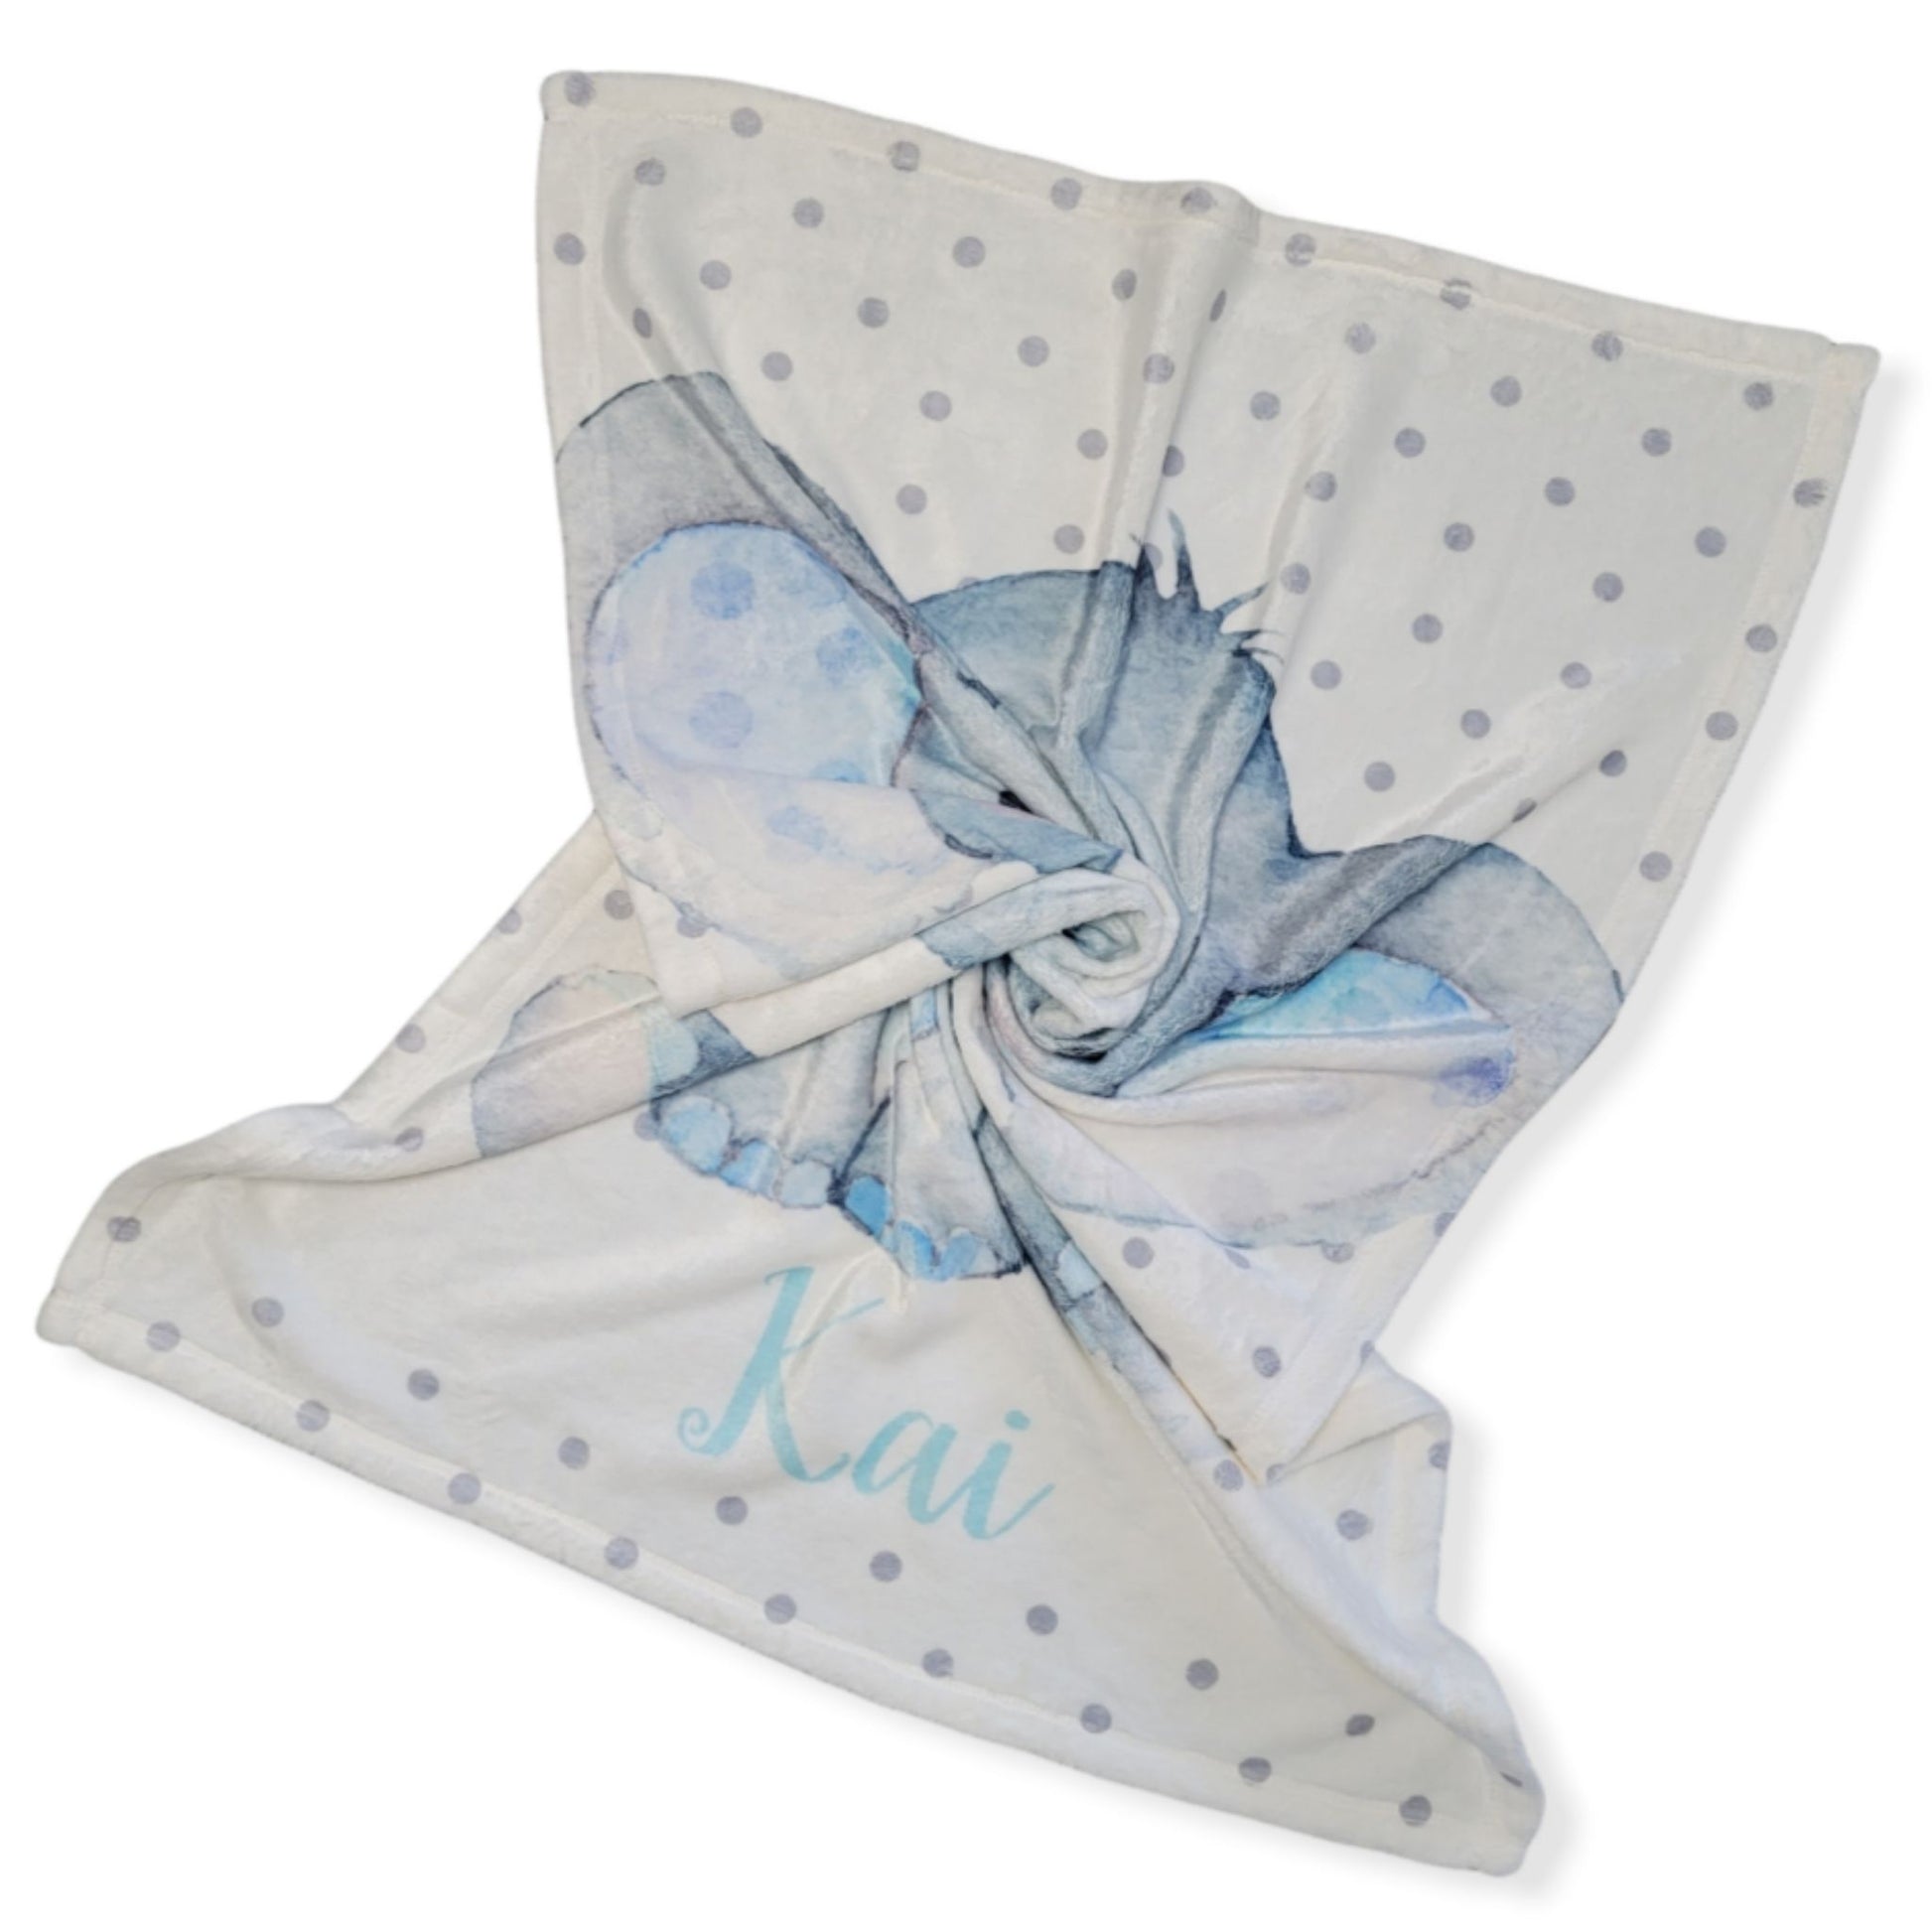 Blue Elephant personalized baby blanket| Nursery themes| Hunny Bubba Kids